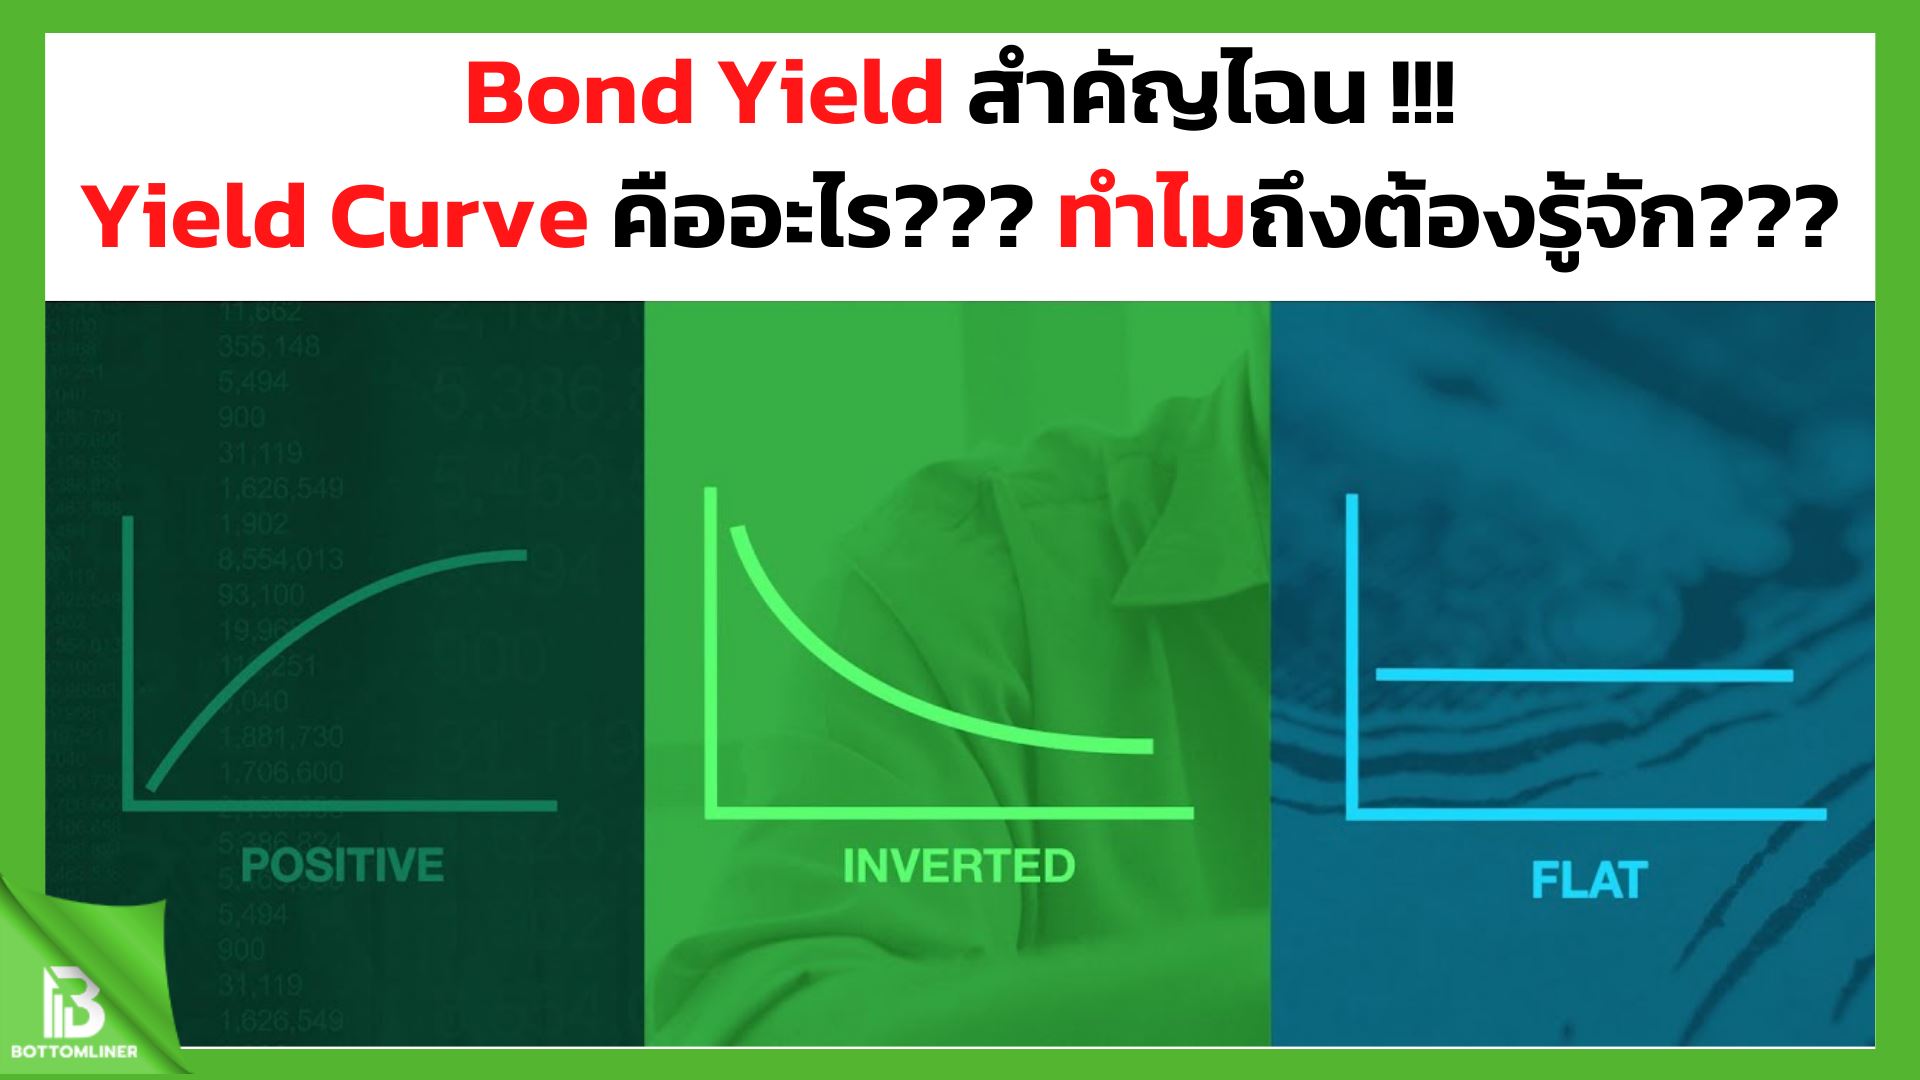 Bond Yield สำคัญไฉน Yield Curve คืออะไร??? ทำไมถึงต้องรู้จัก???